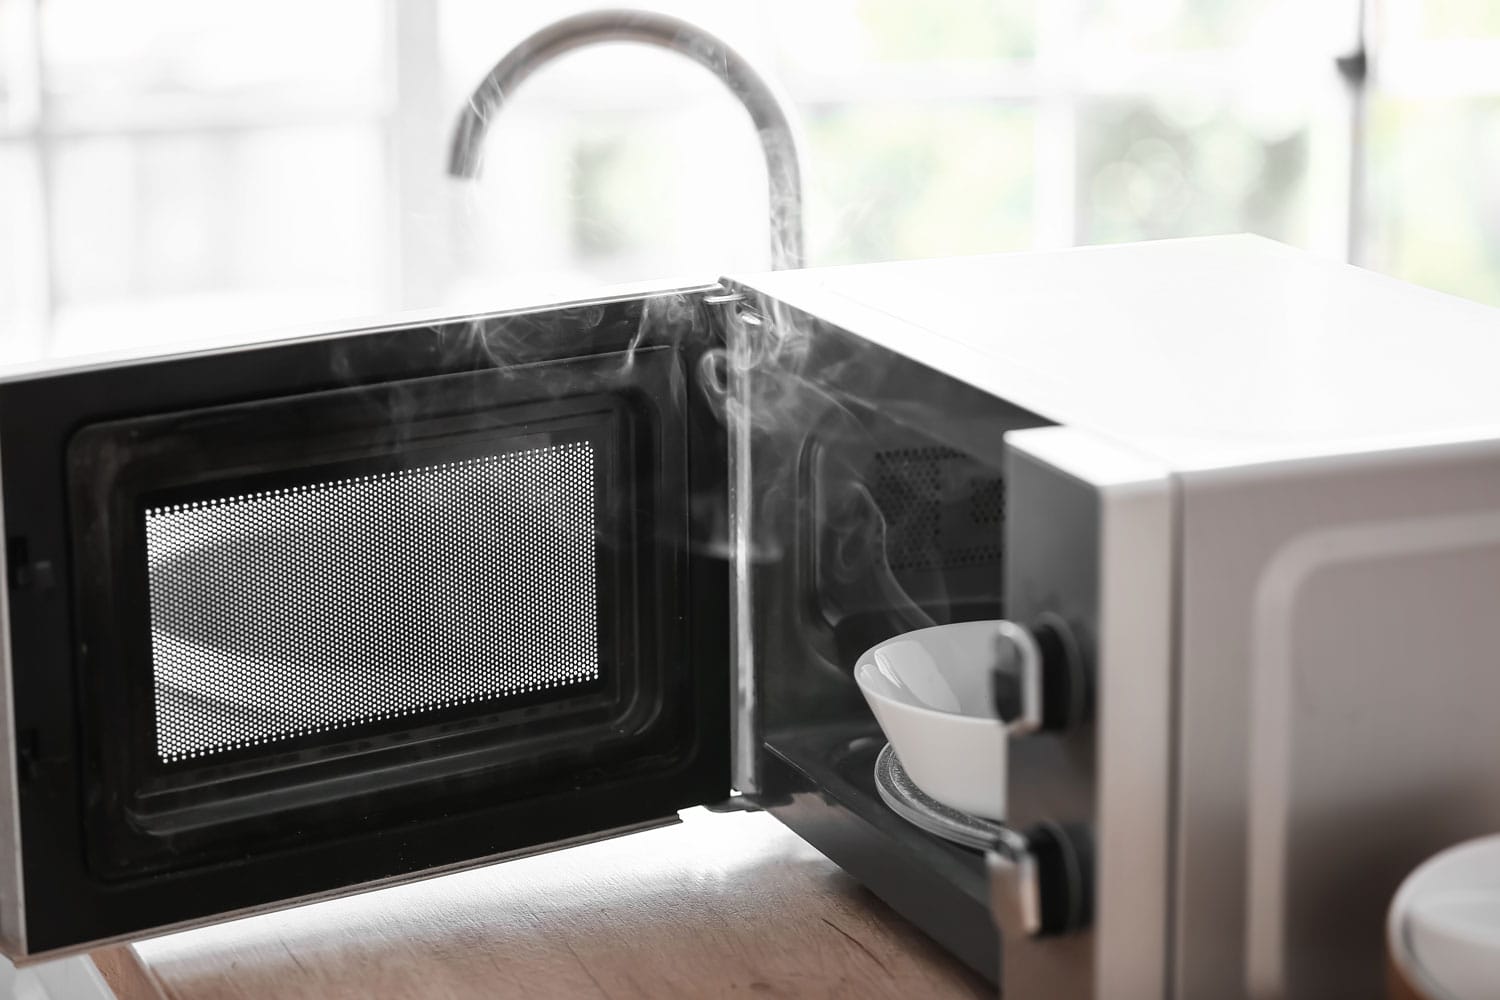 Broken or smoking microwave oven